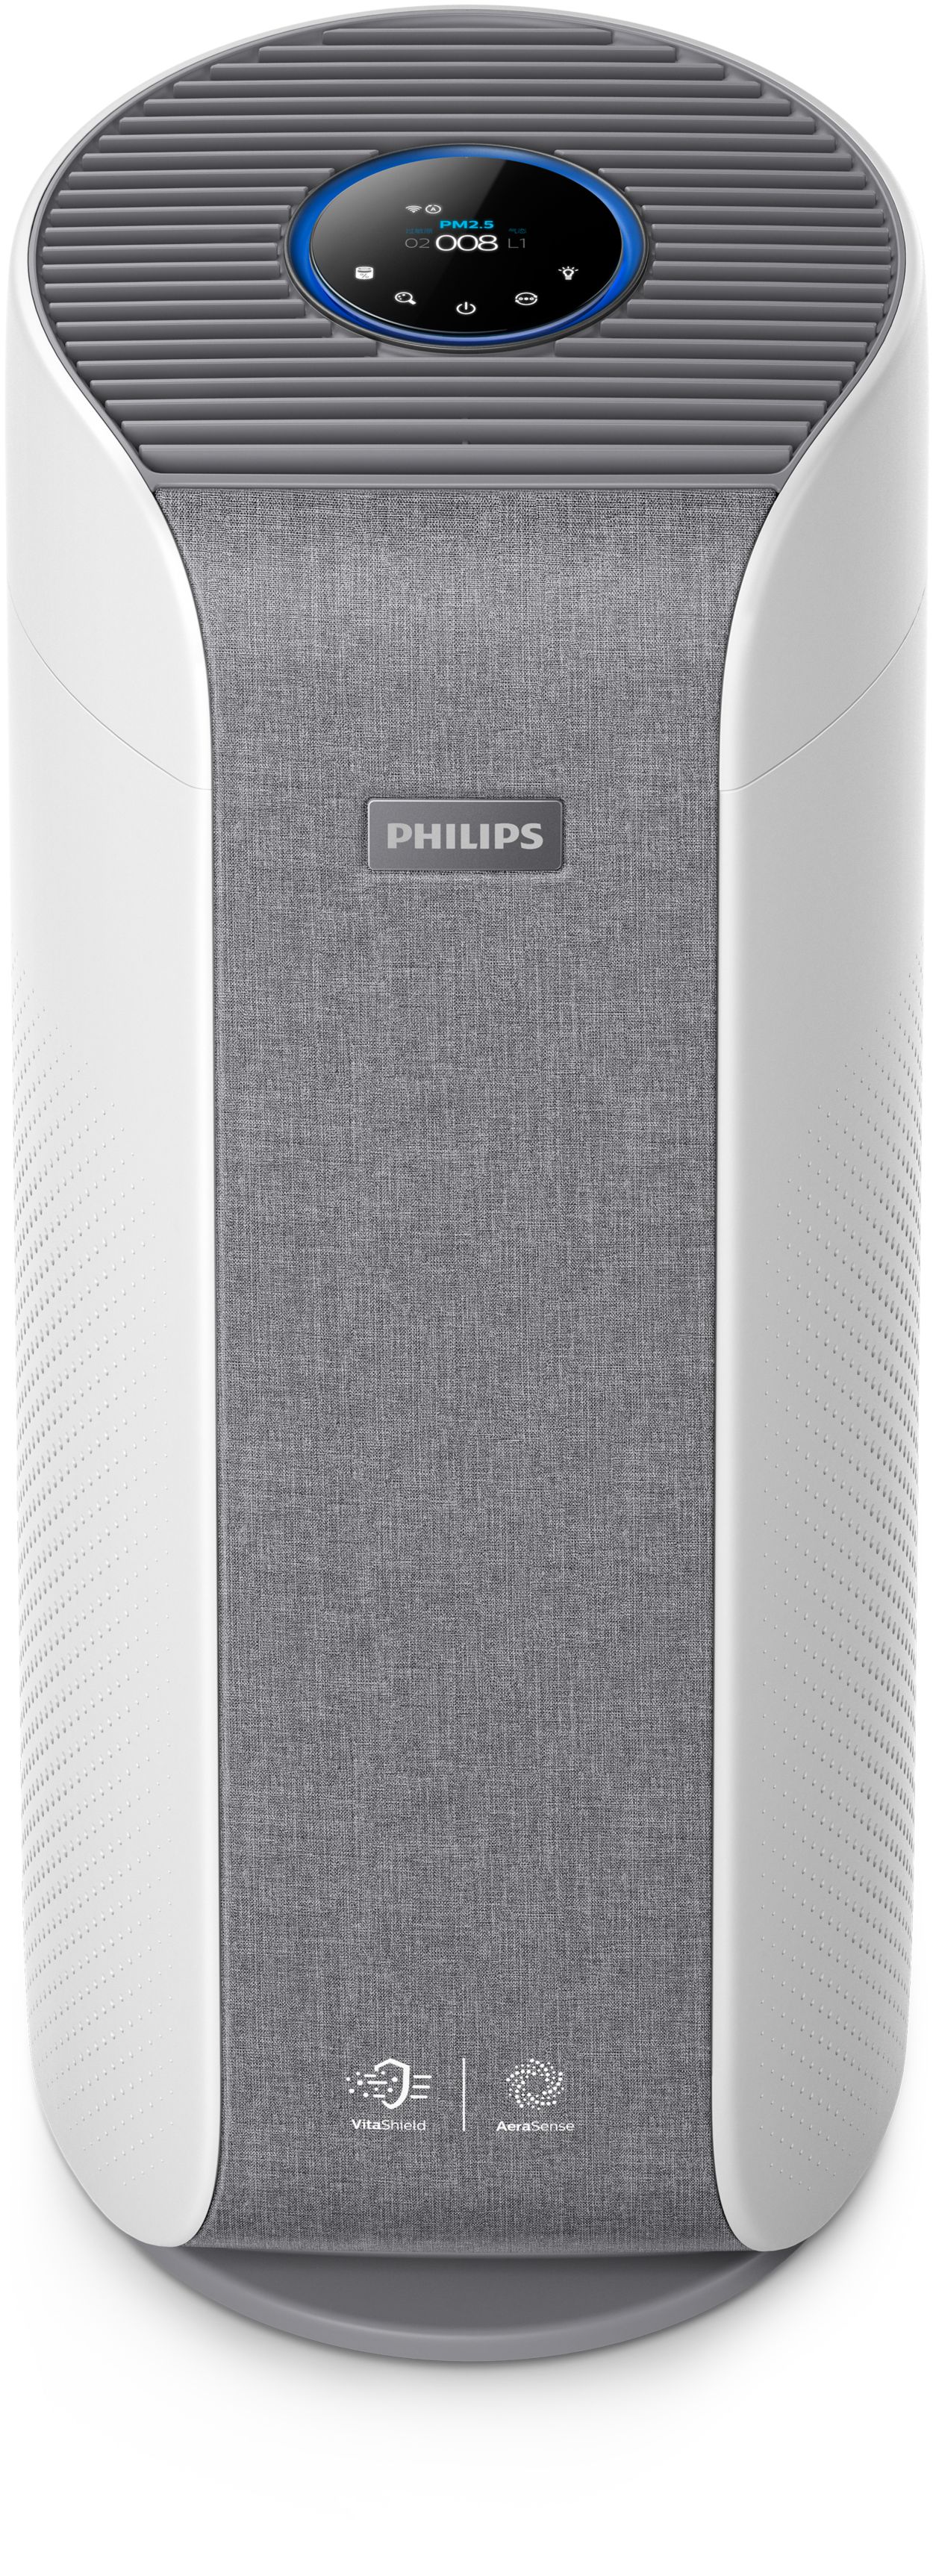 Purificatore d'aria Philips Serie 4000i: diventa tester - DimmiCosaCerchi